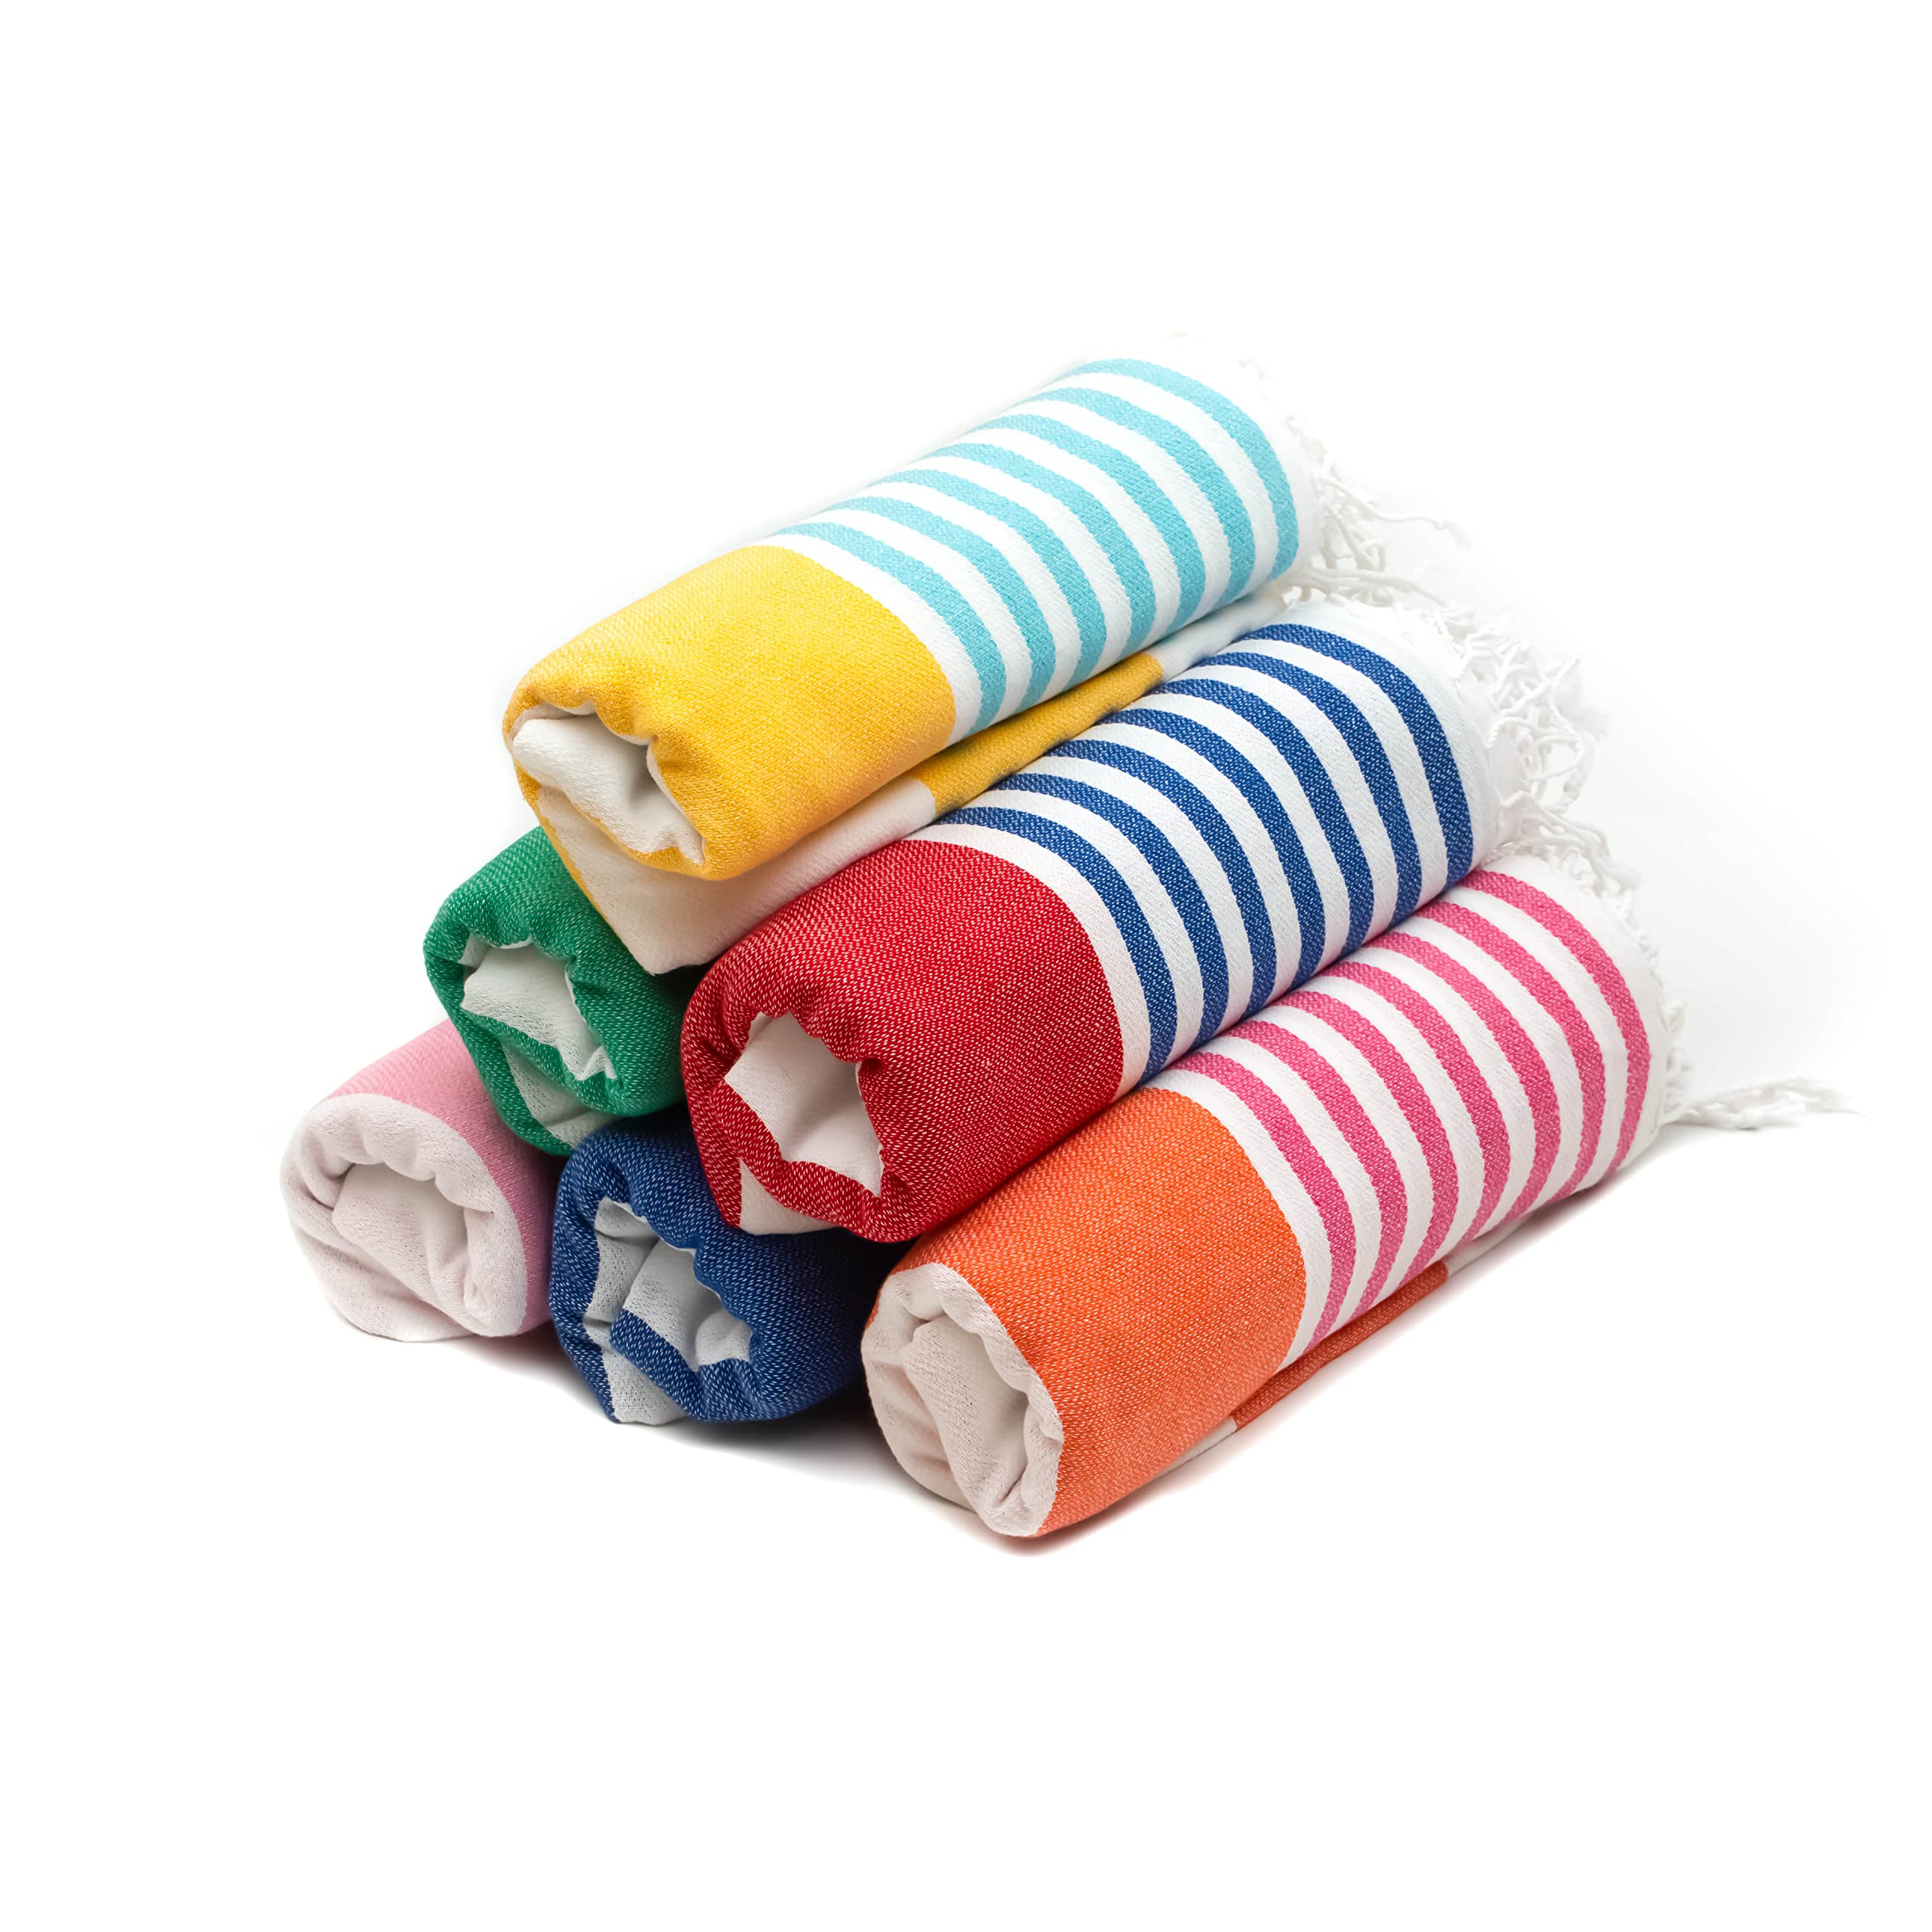 FATSLON Sale 6 Pack Turkish Beach Towel 39x71-Inch100 Turkish Cotton Prewashed Sand Free Oversized Absorbent Quick Dry Light